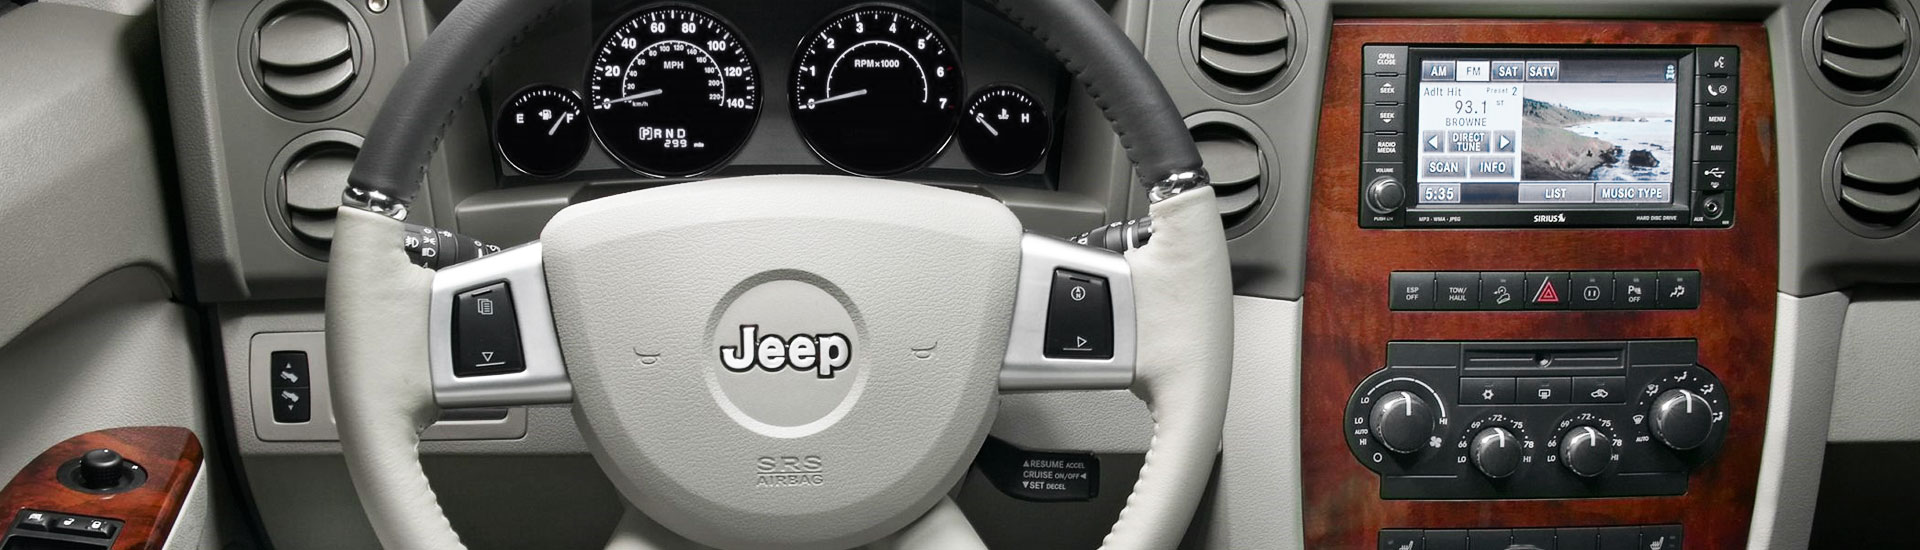 2017 Jeep Grand Cherokee Custom Dash Kits